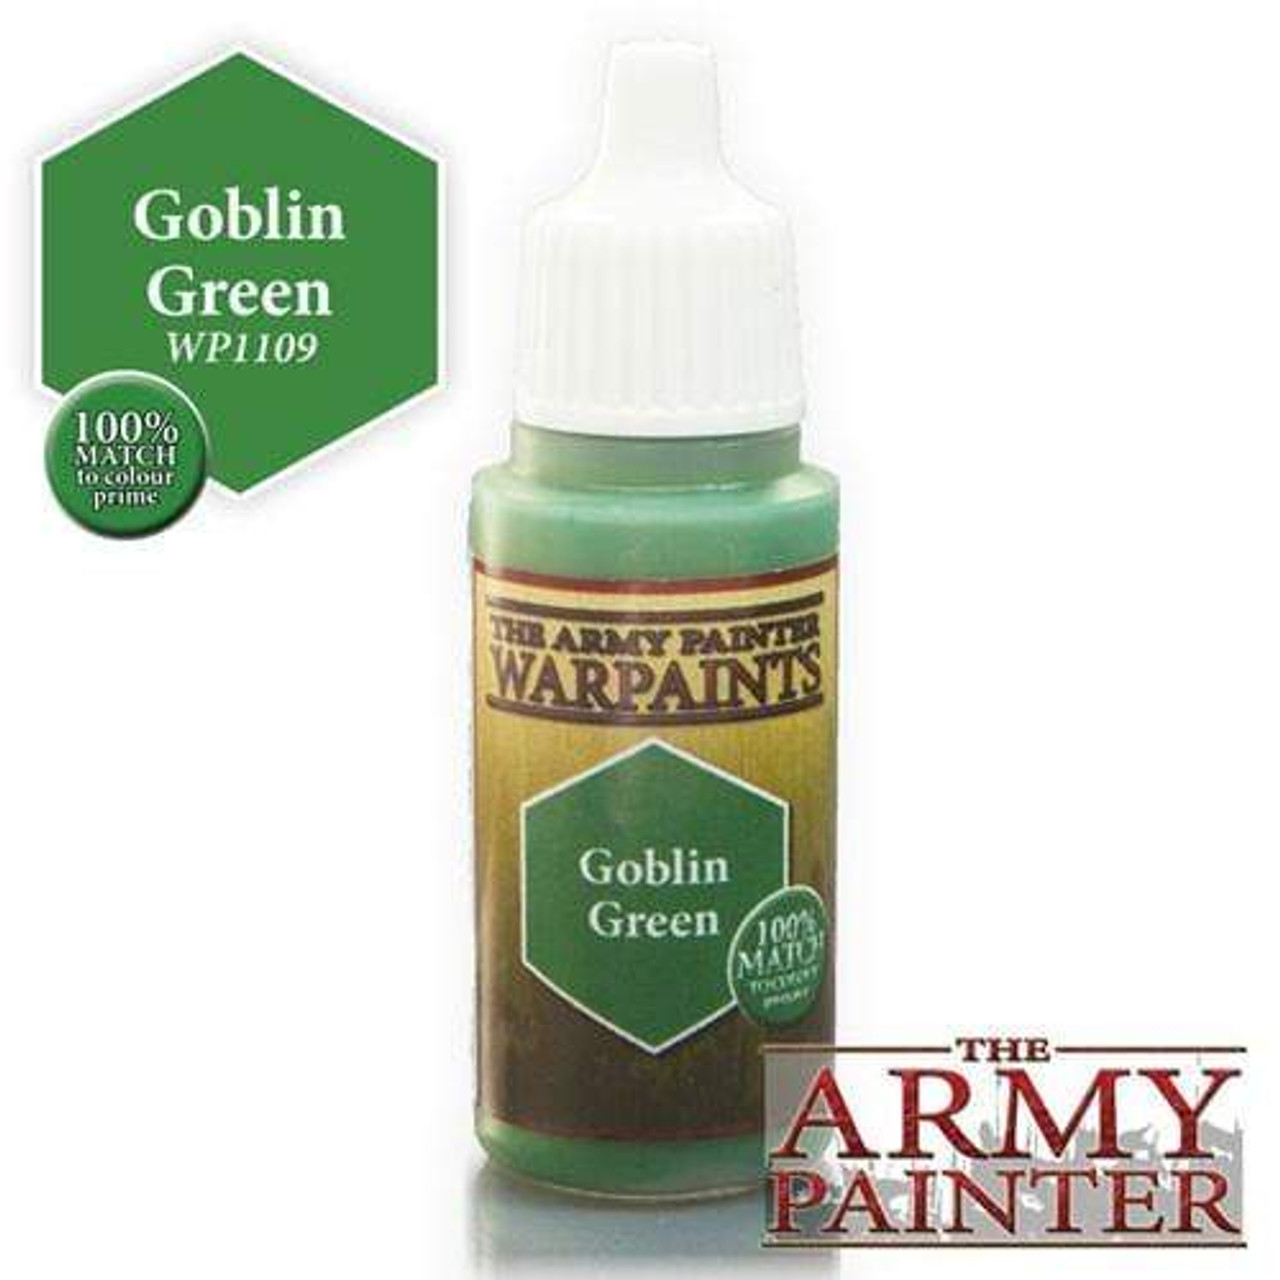 Army Painter Warpaint: Goblin Green